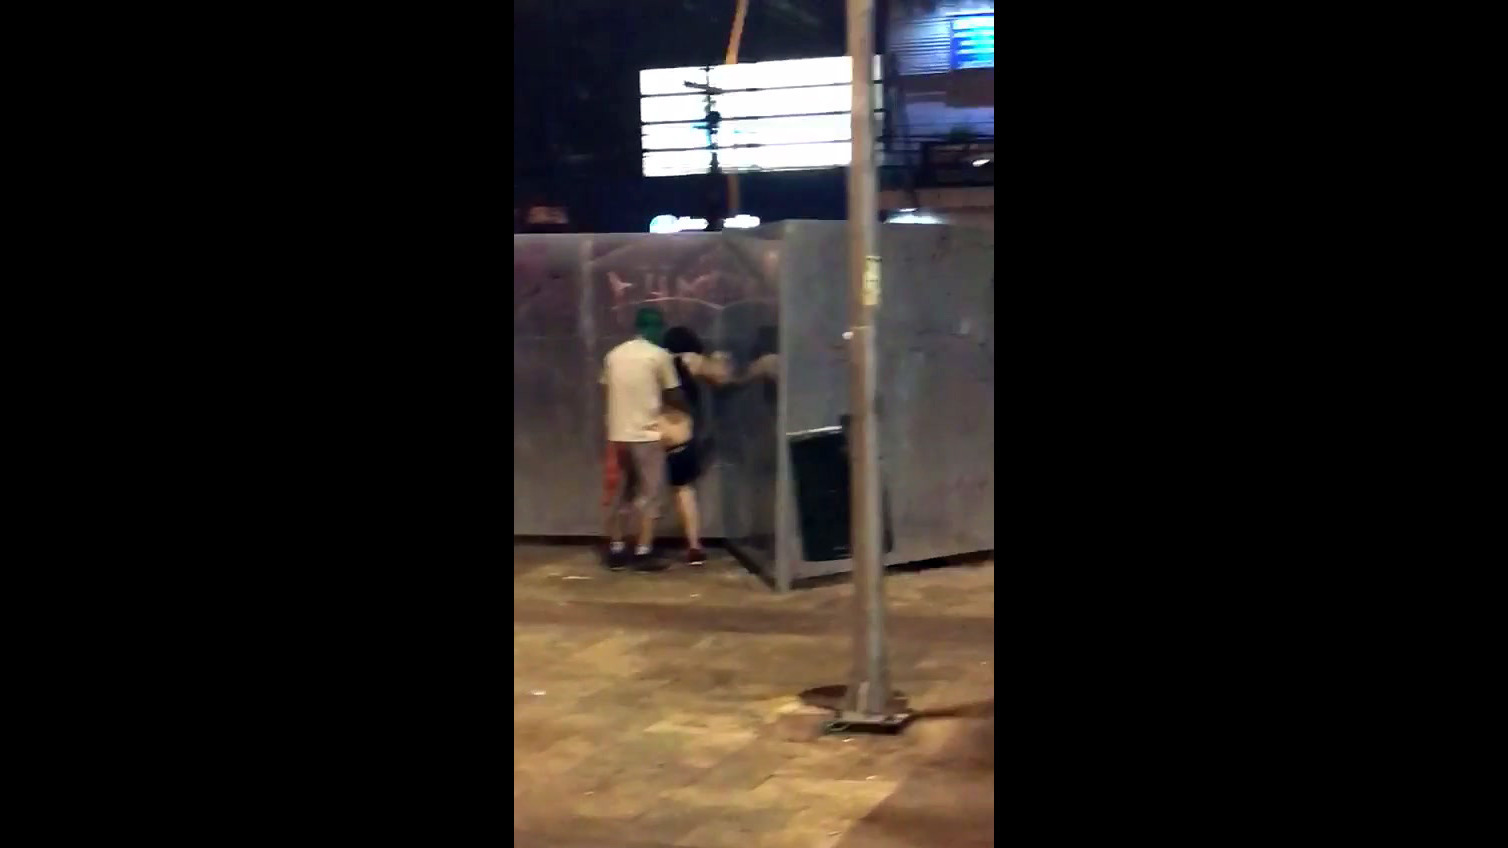 Public standing penetrating filmed by